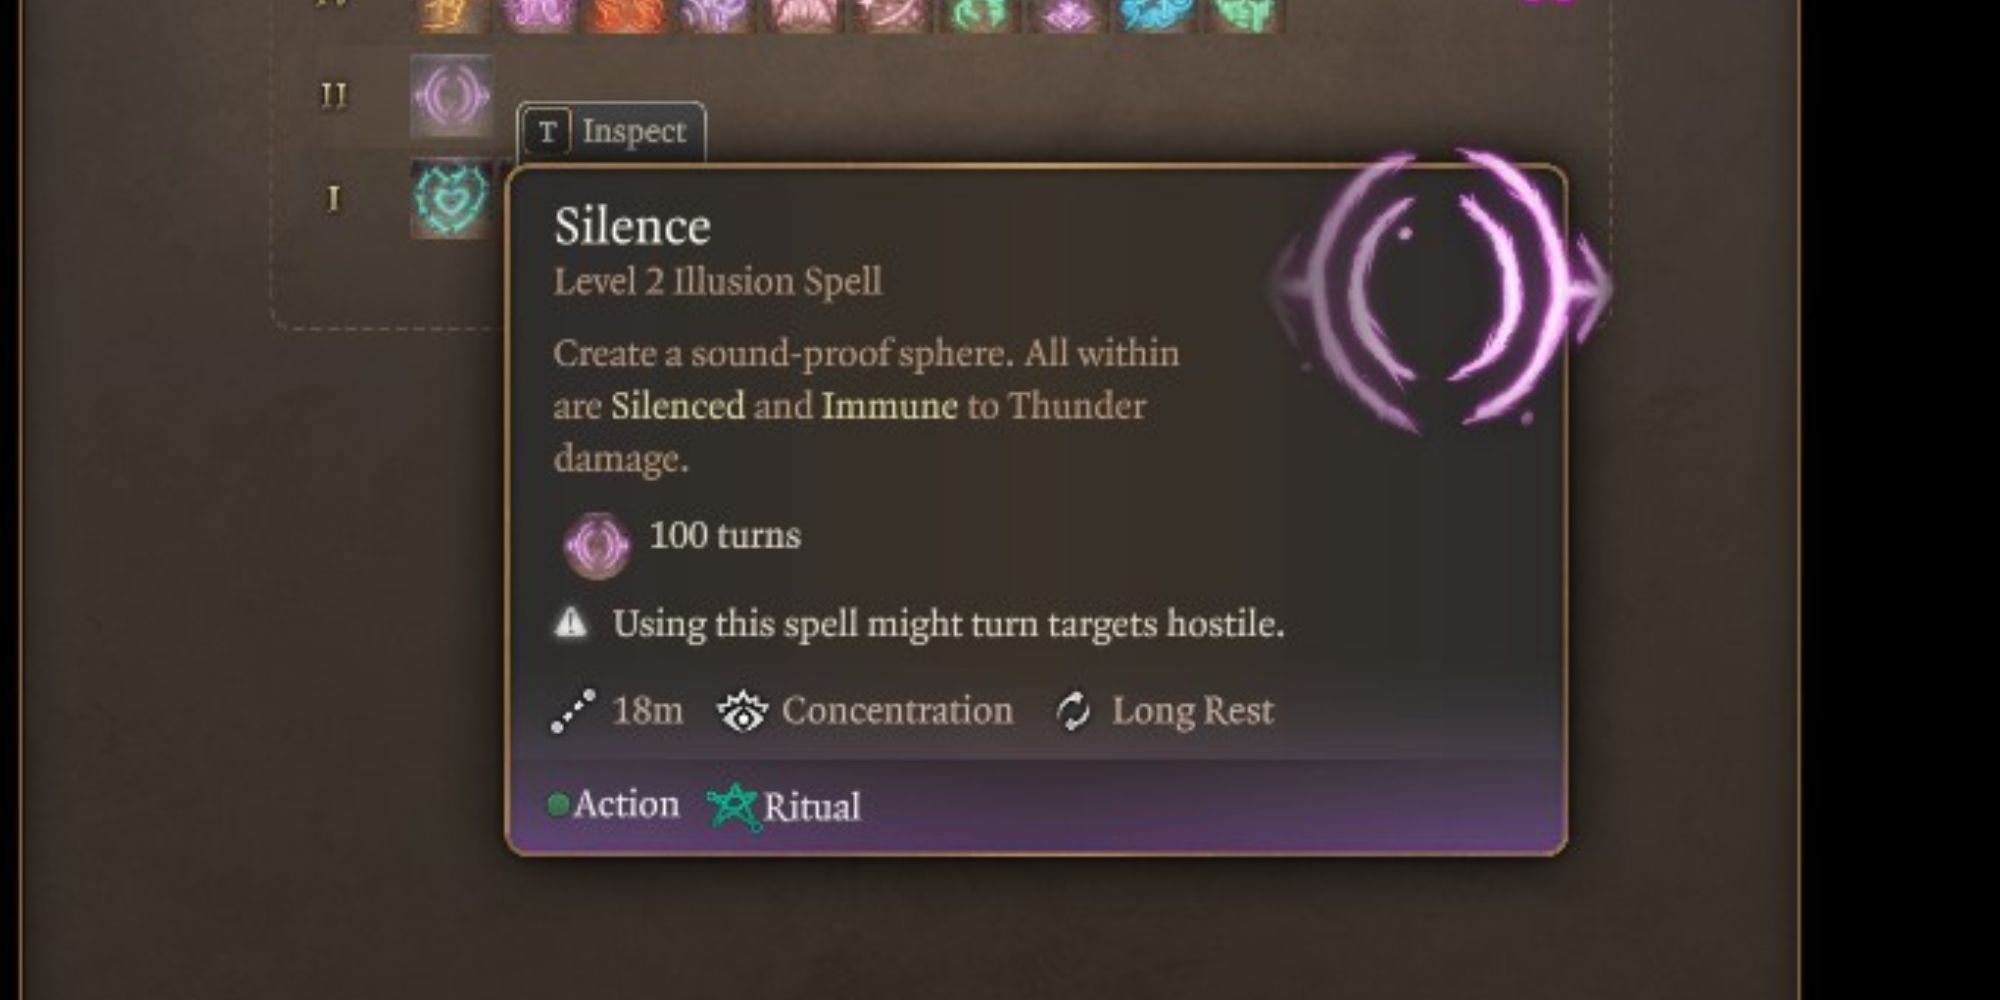 The Silence spell in Baldur’s Gate 3